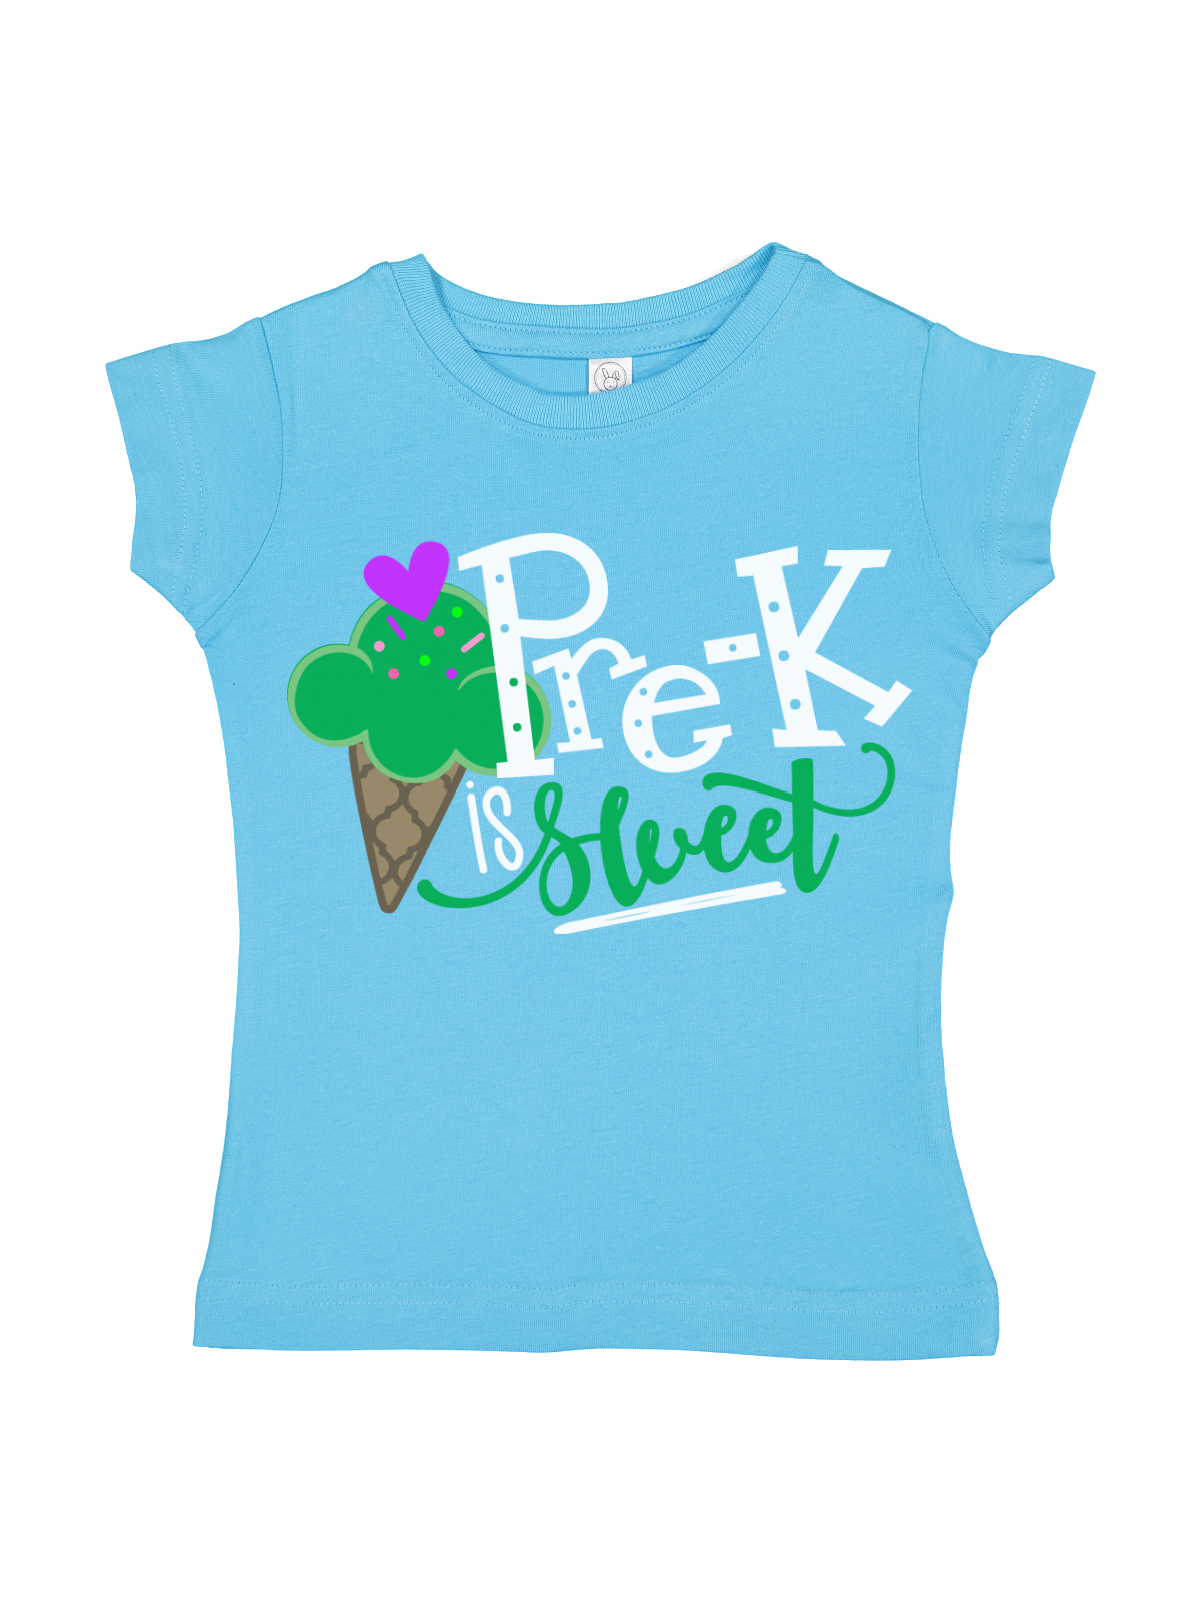 Pre K is Sweet Girls Blue Shirt